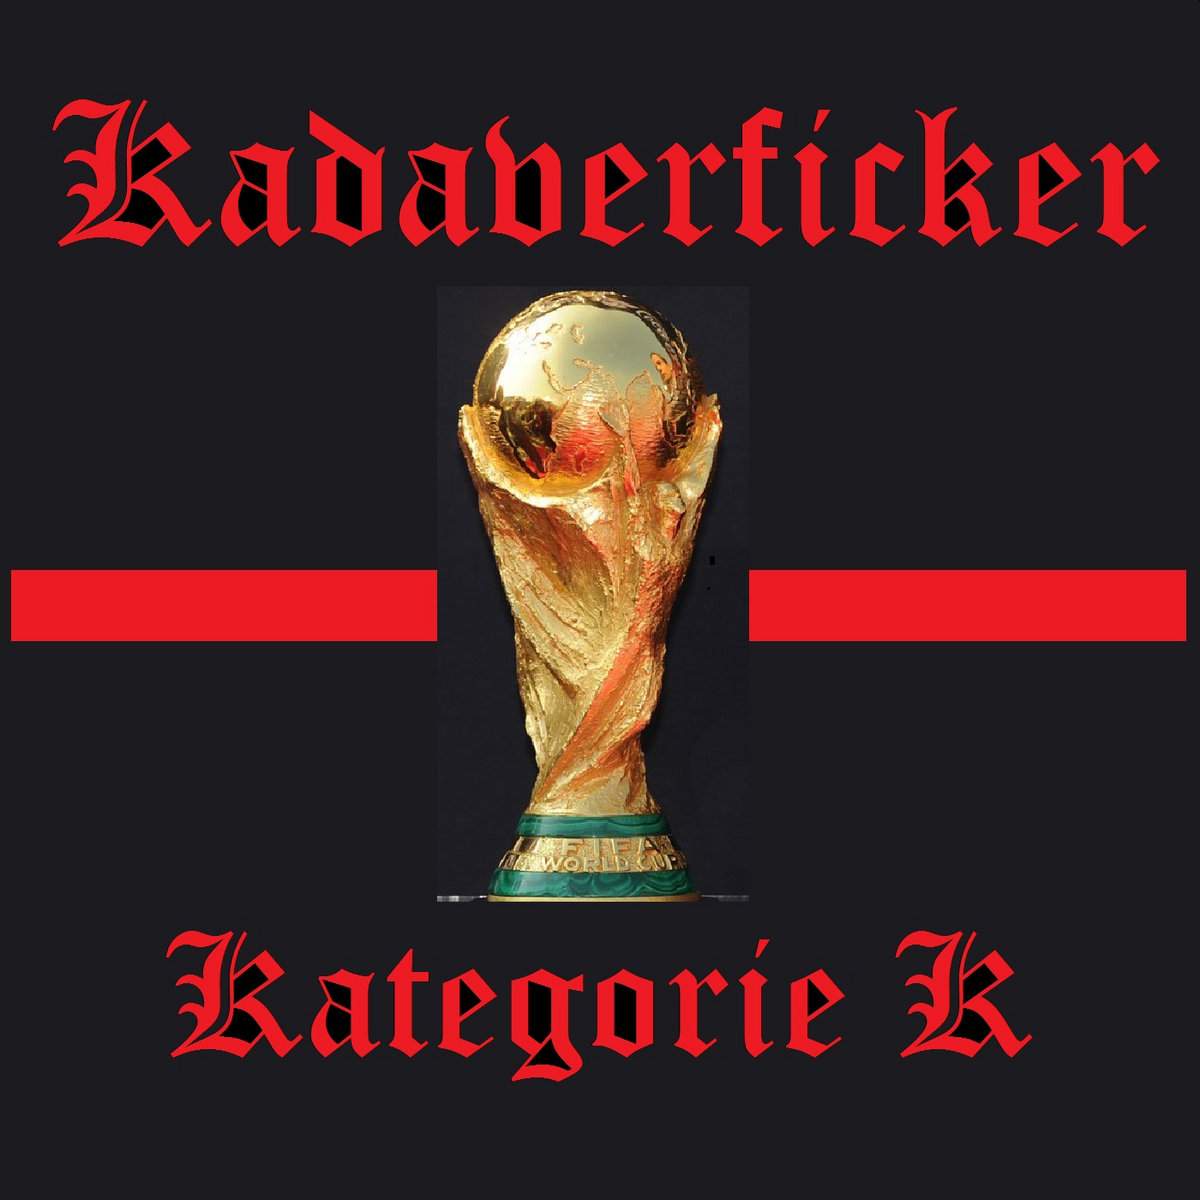 KADAVERFICKER - Kategorie K cover 